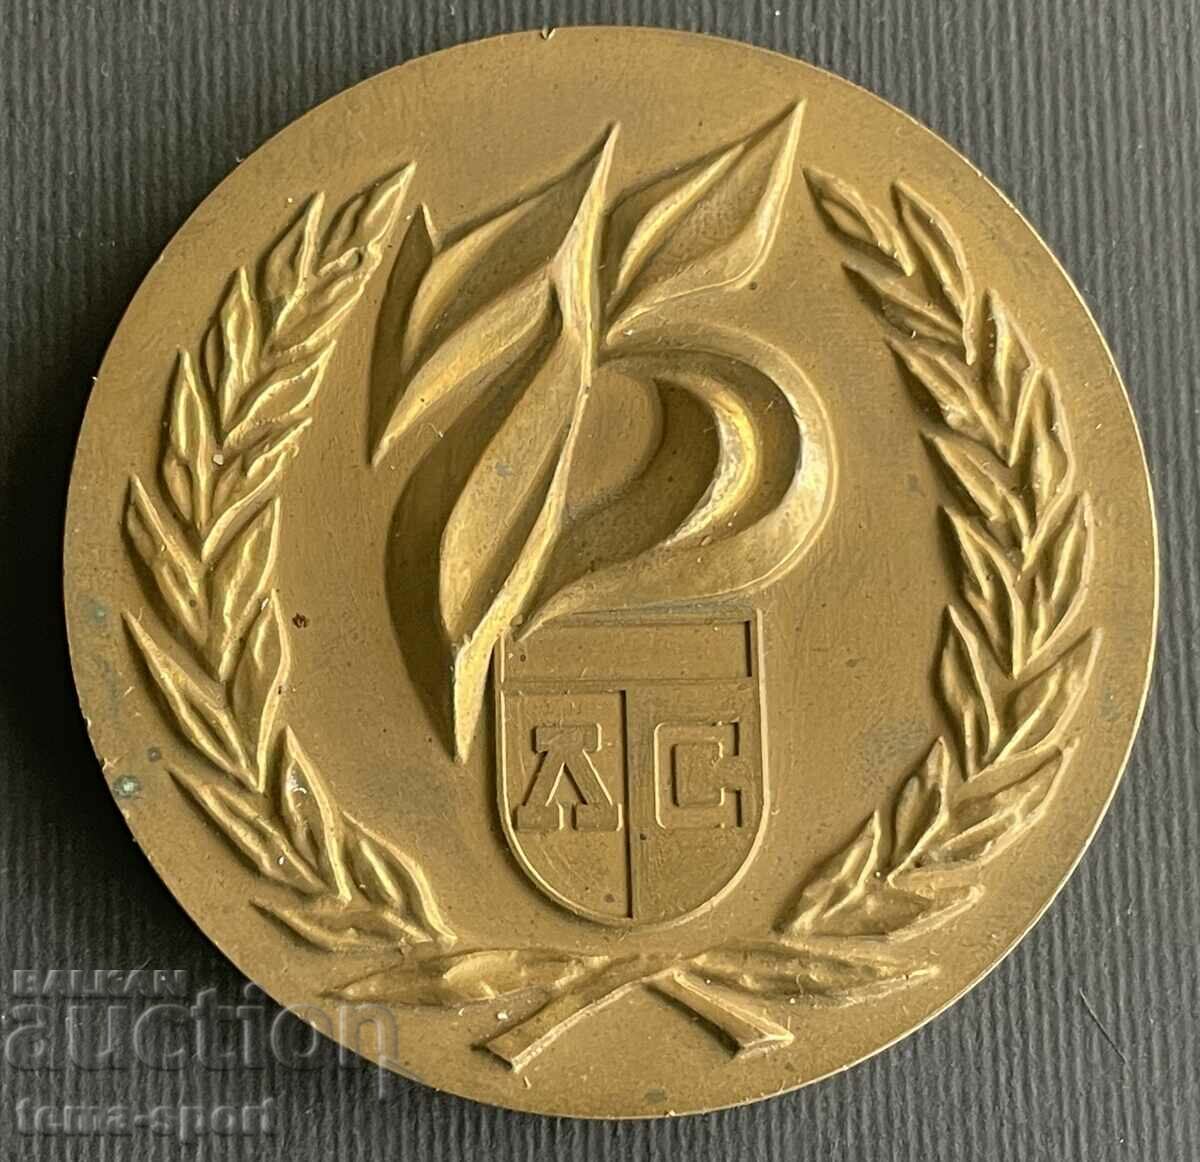 63 Bulgaria plaque 75 Sports and football club Levski Sofia